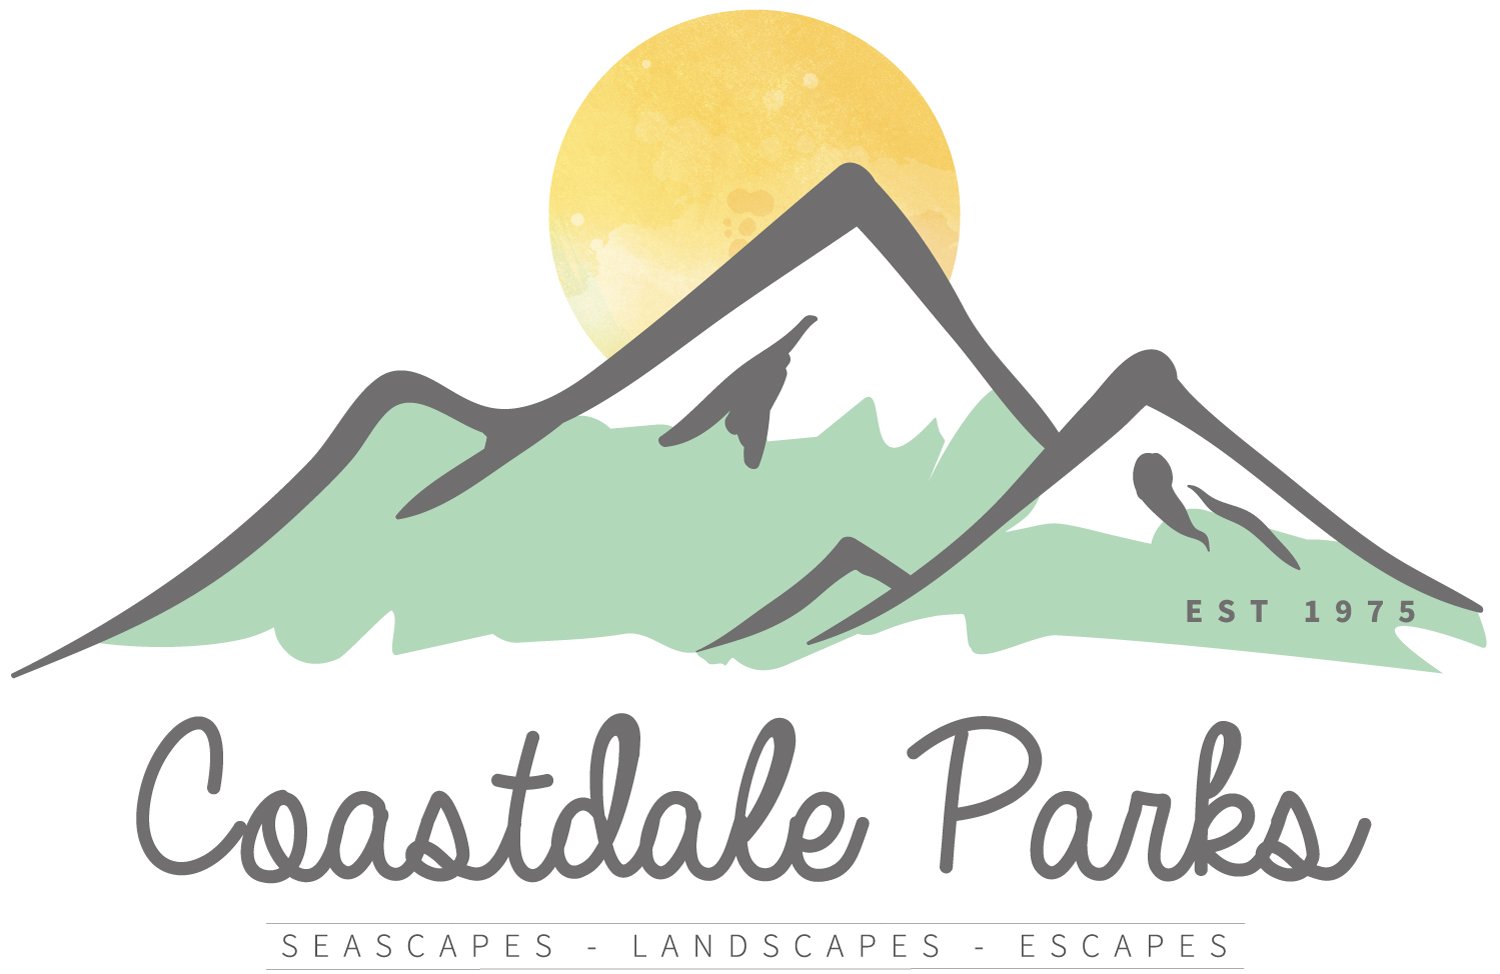 coastdaleparks-logo-amazon.jpg